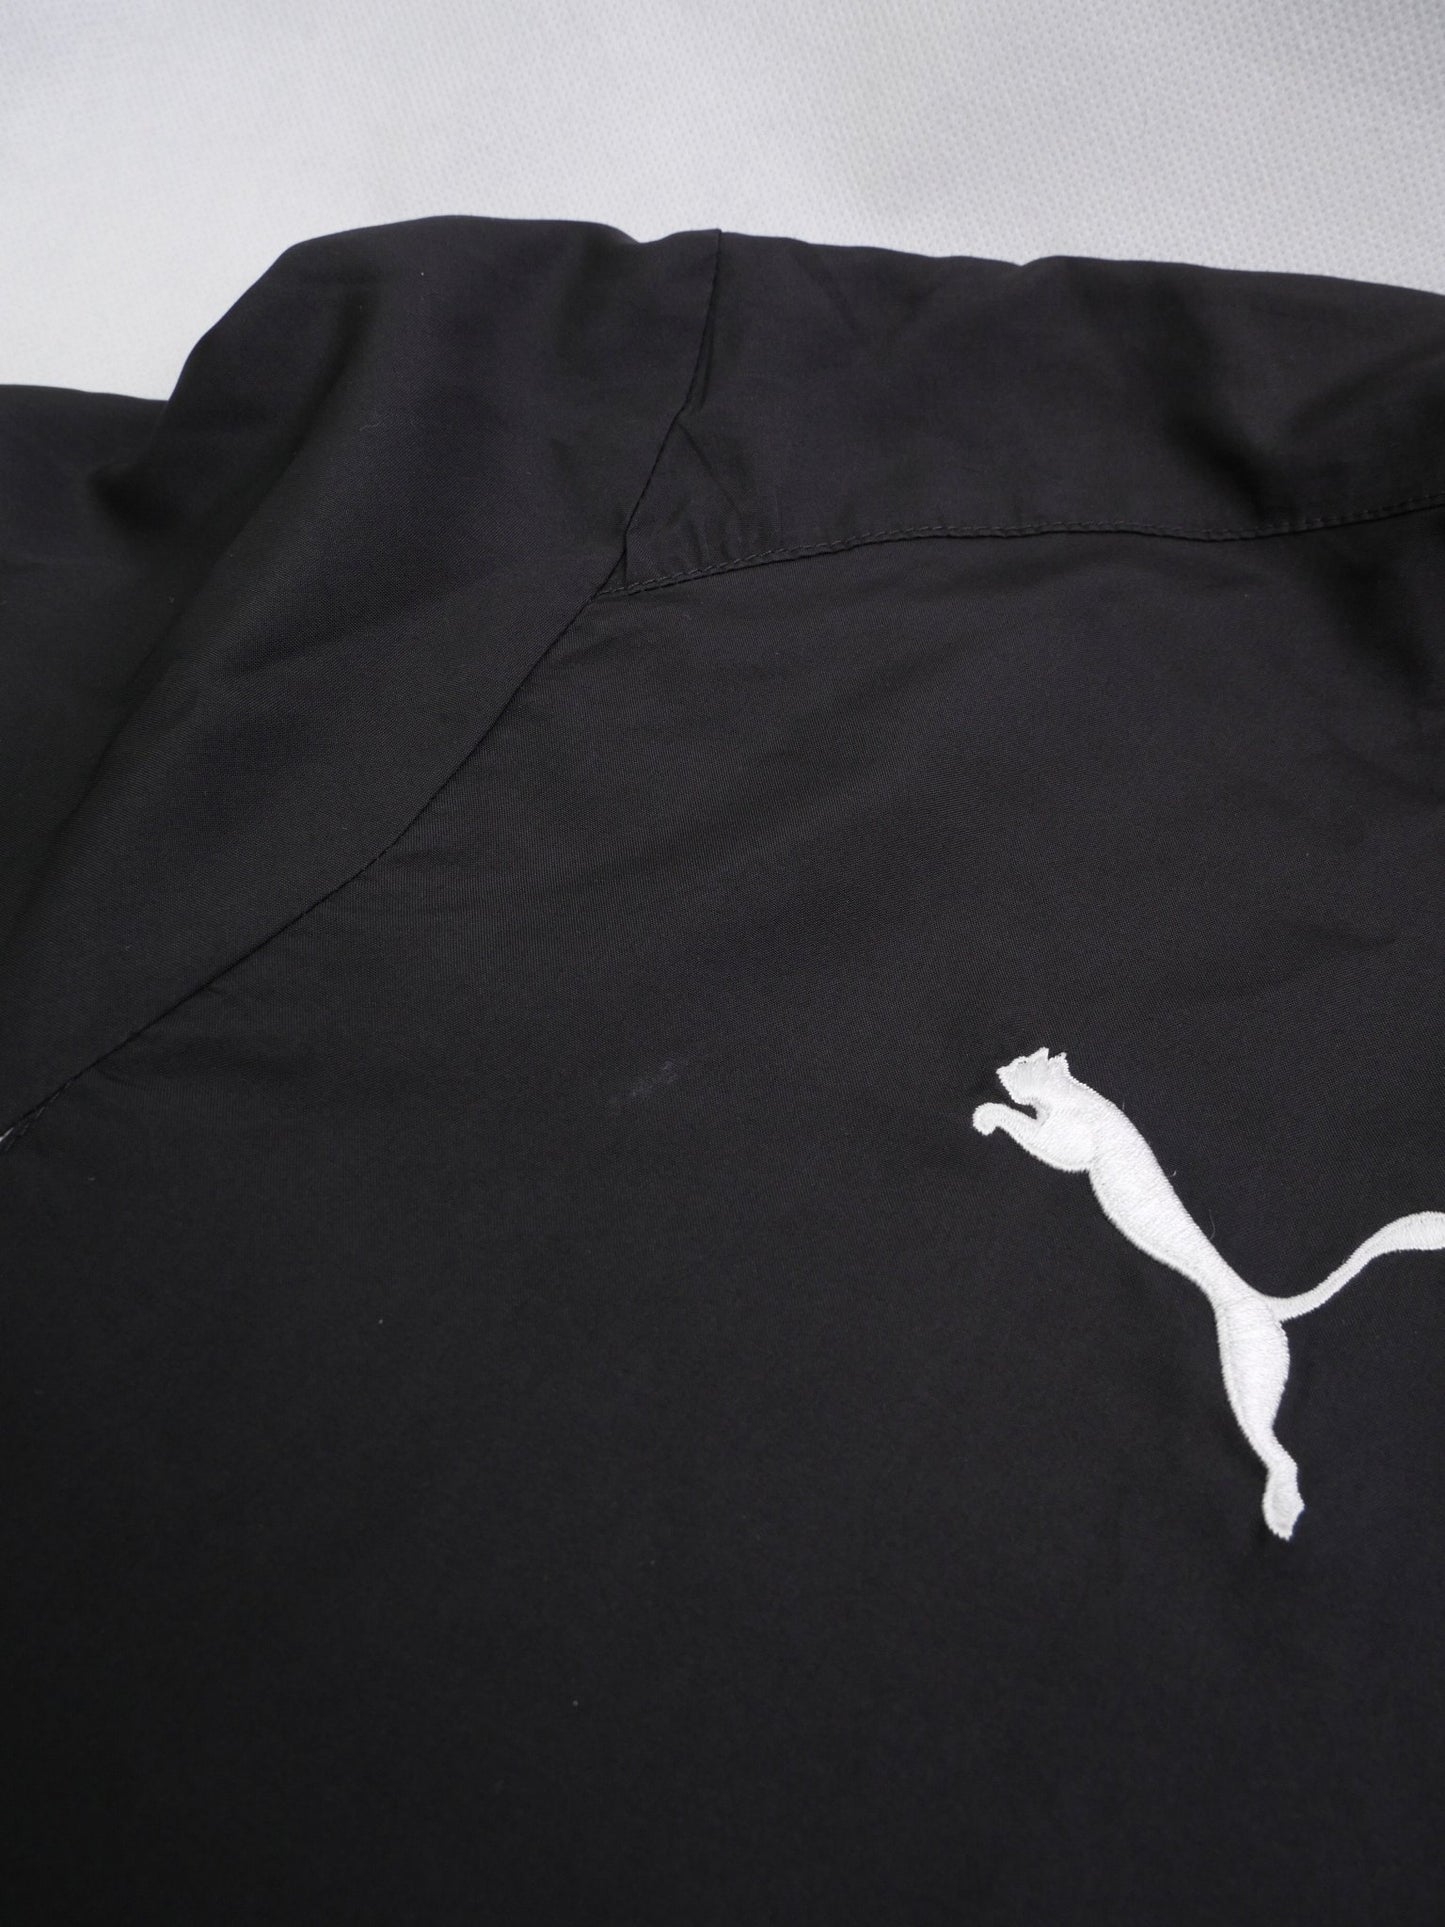 puma embroidered Logo black and white Track Jacket - Peeces